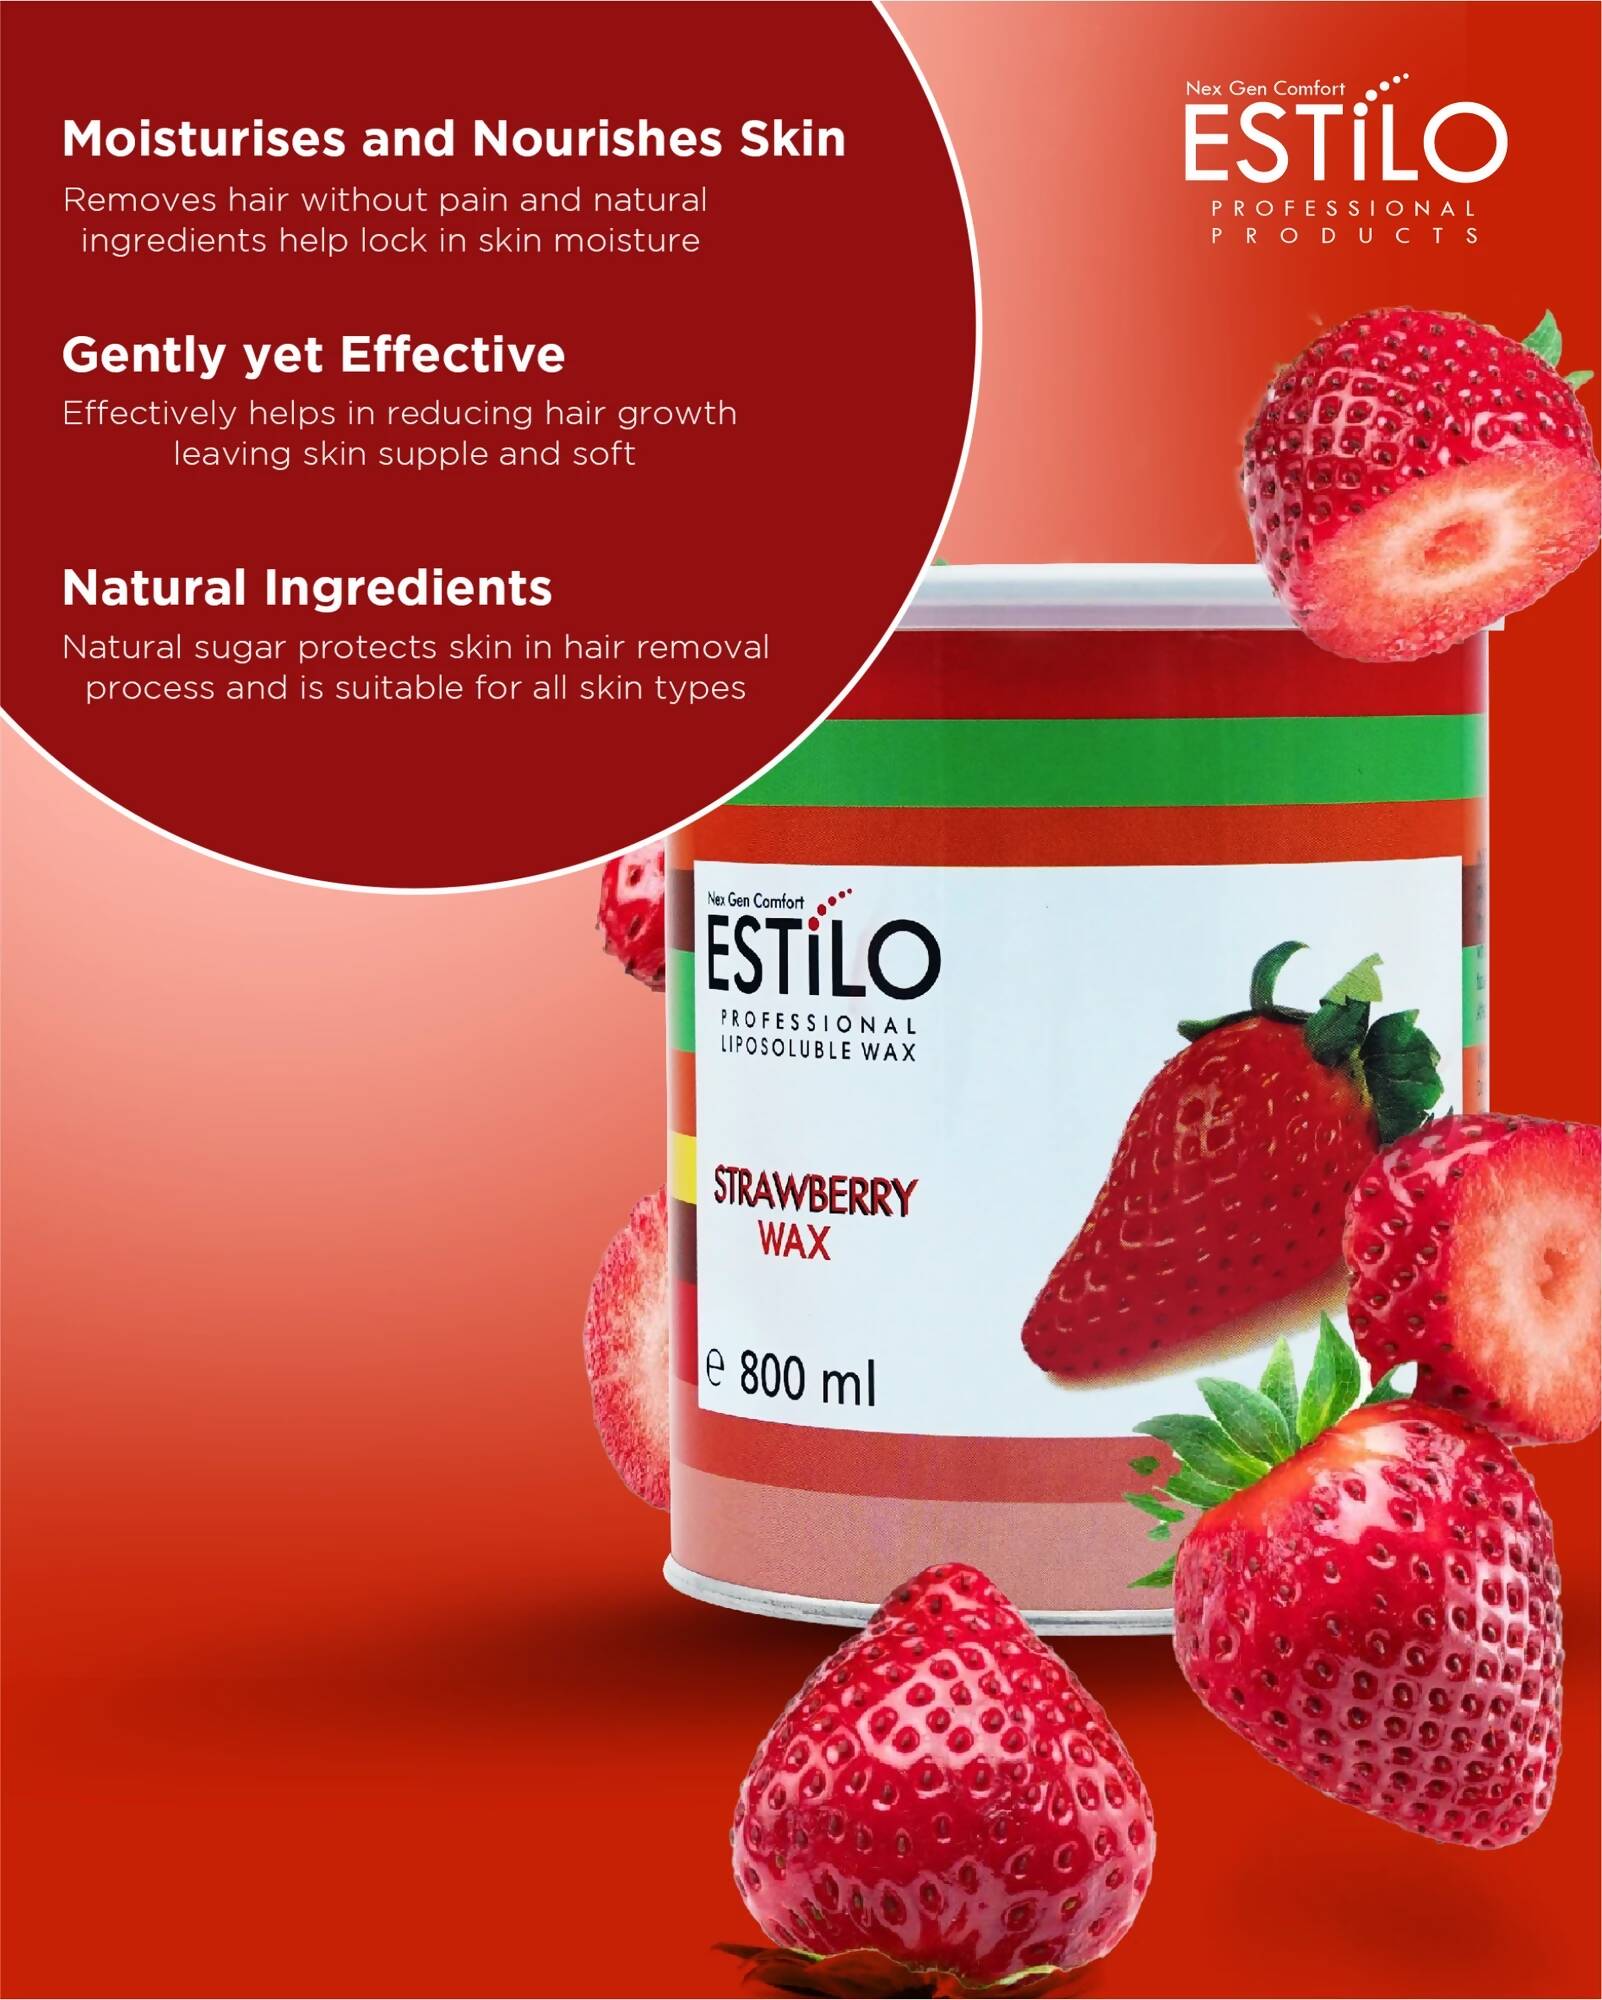 benefits of strawberry wax